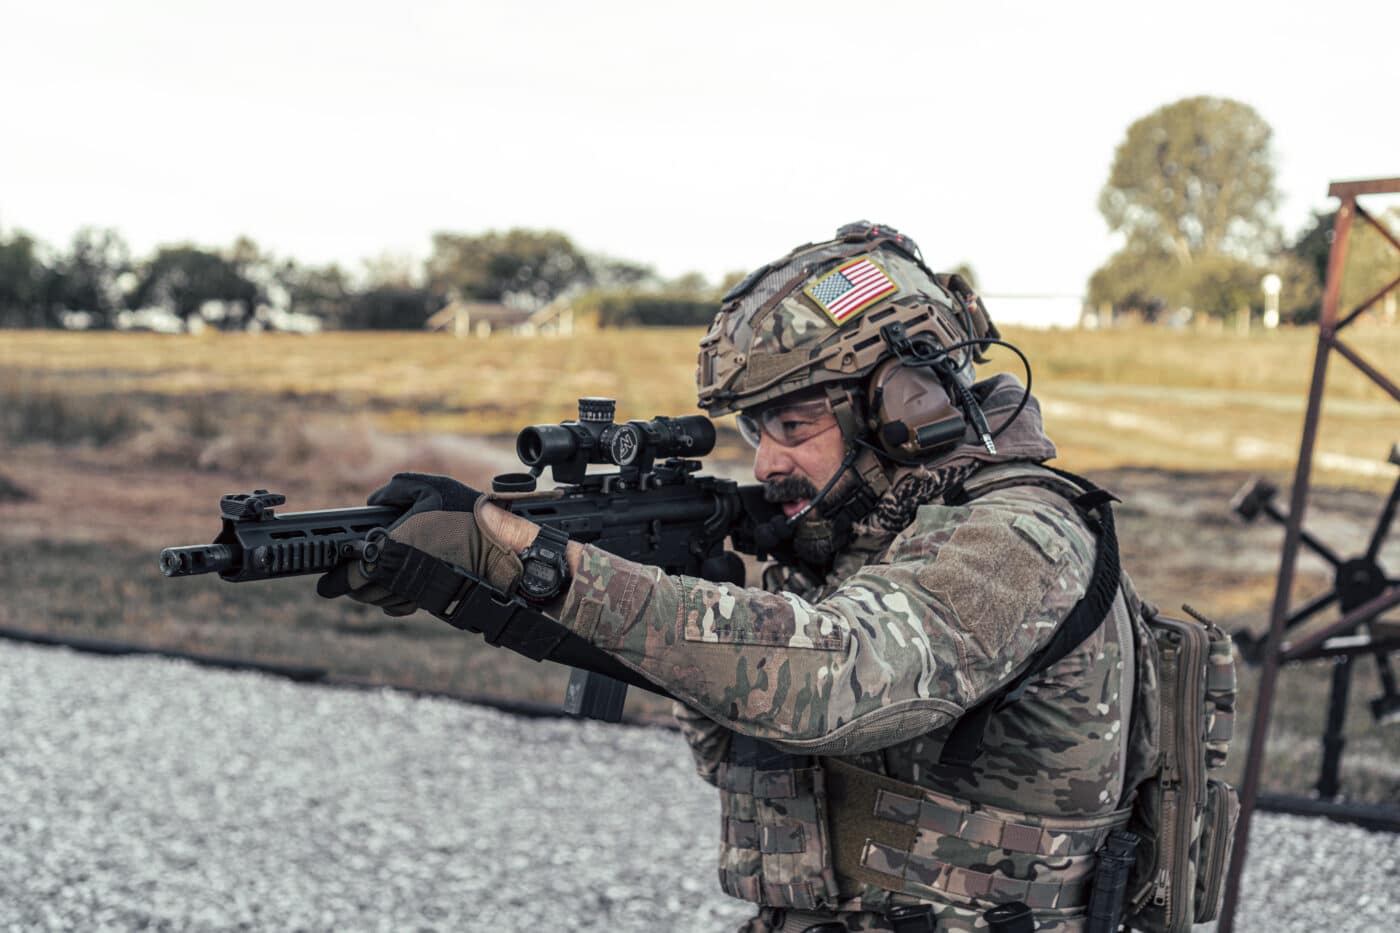 Solider using rifle with Nightforce NX8 1-8x scope